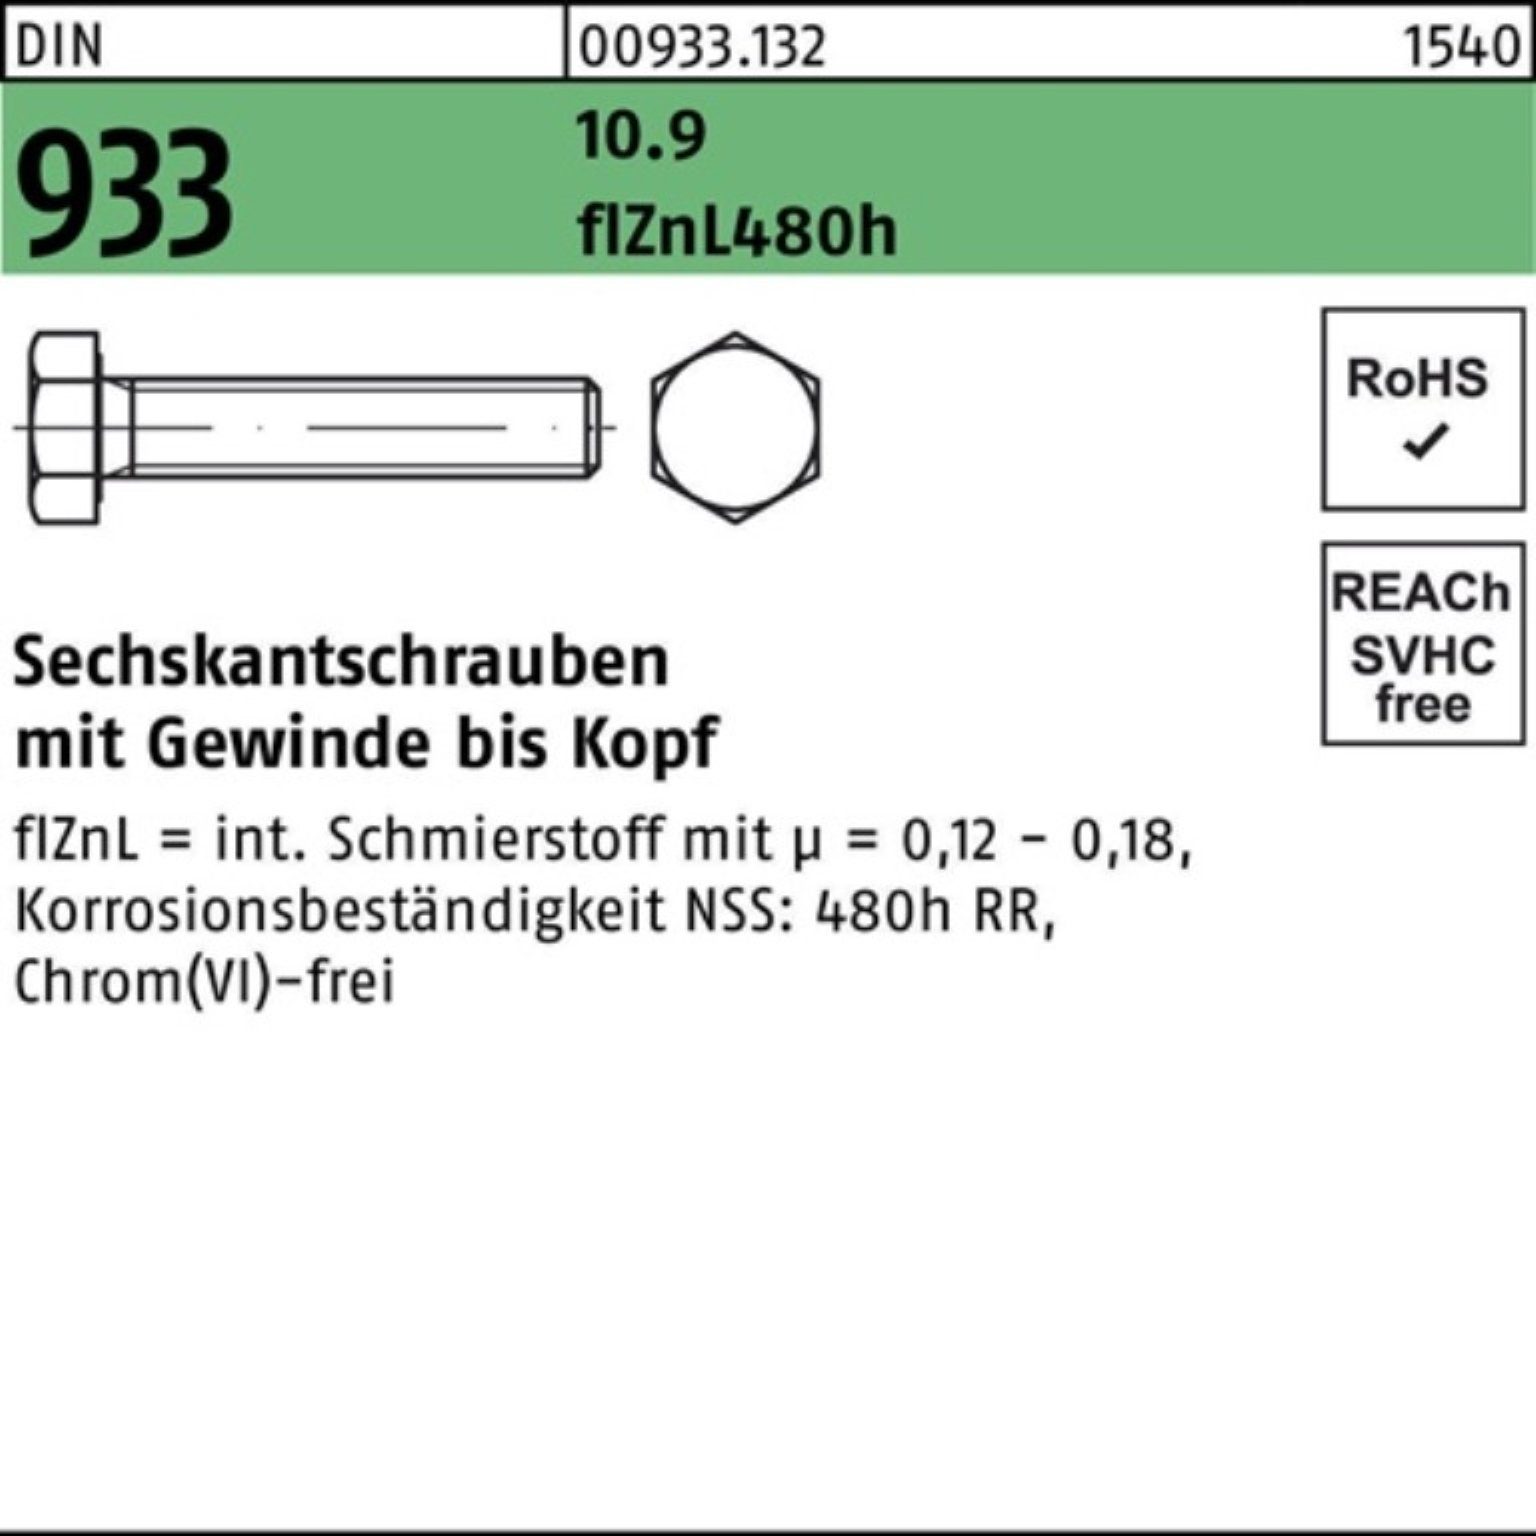 M6x Pack flZnL/nc/x/x/480h 933 VG Sechskantschraube 10 DIN 500er Sechskantschraube Reyher 10.9